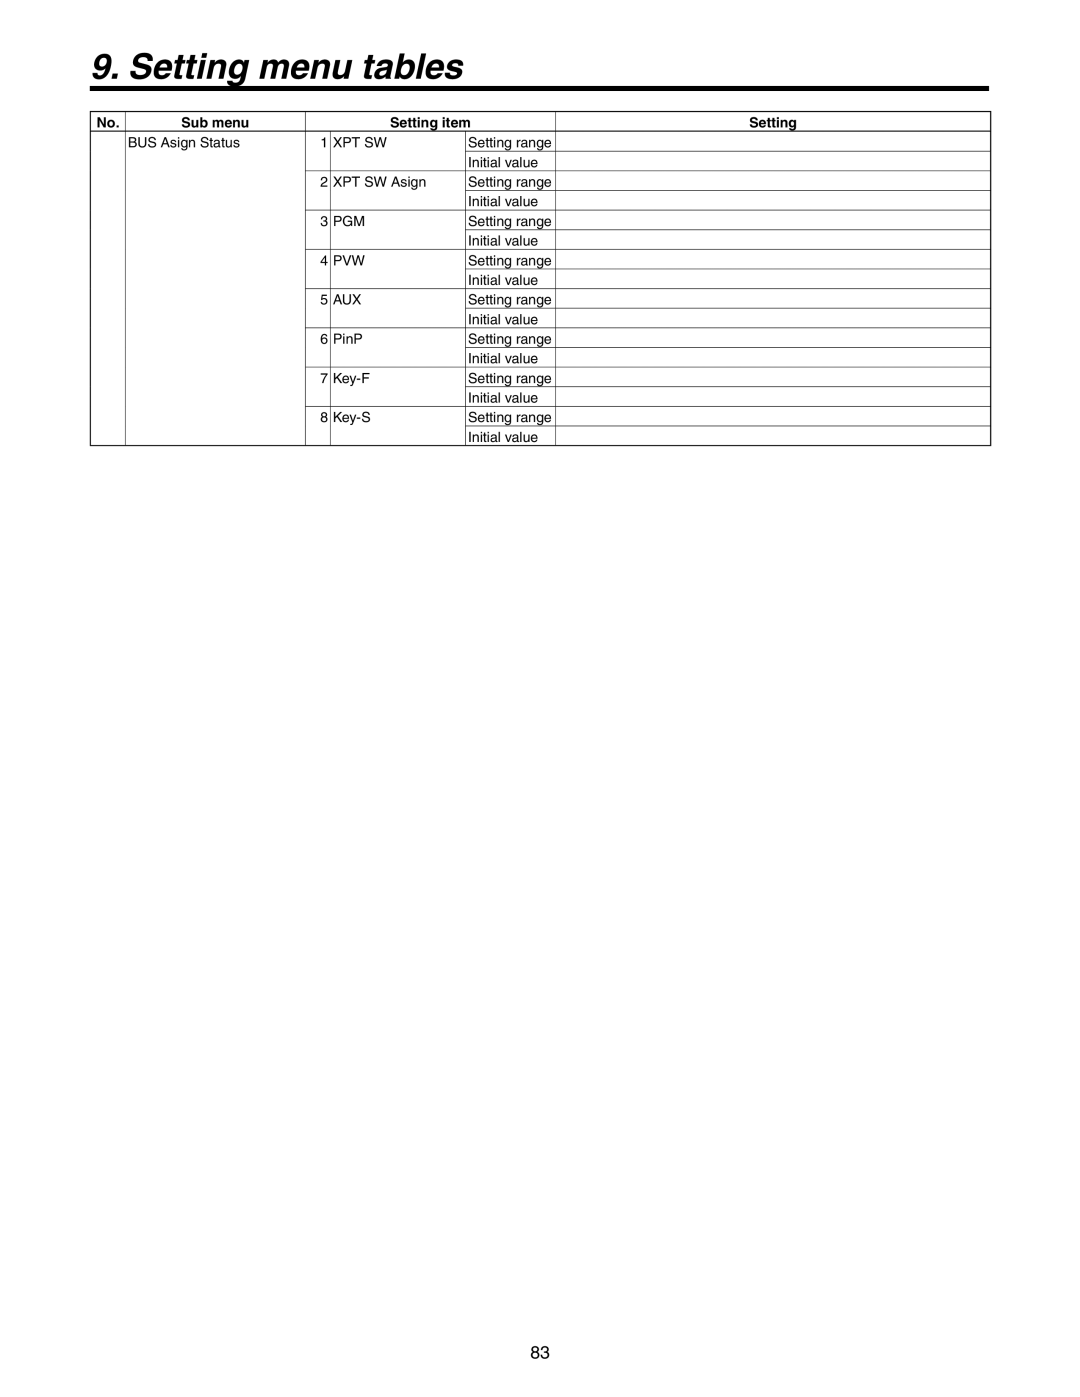 Panasonic AW-HS50N operating instructions Setting menu tables, Sub menu, BUS Asign Status, Setting item 